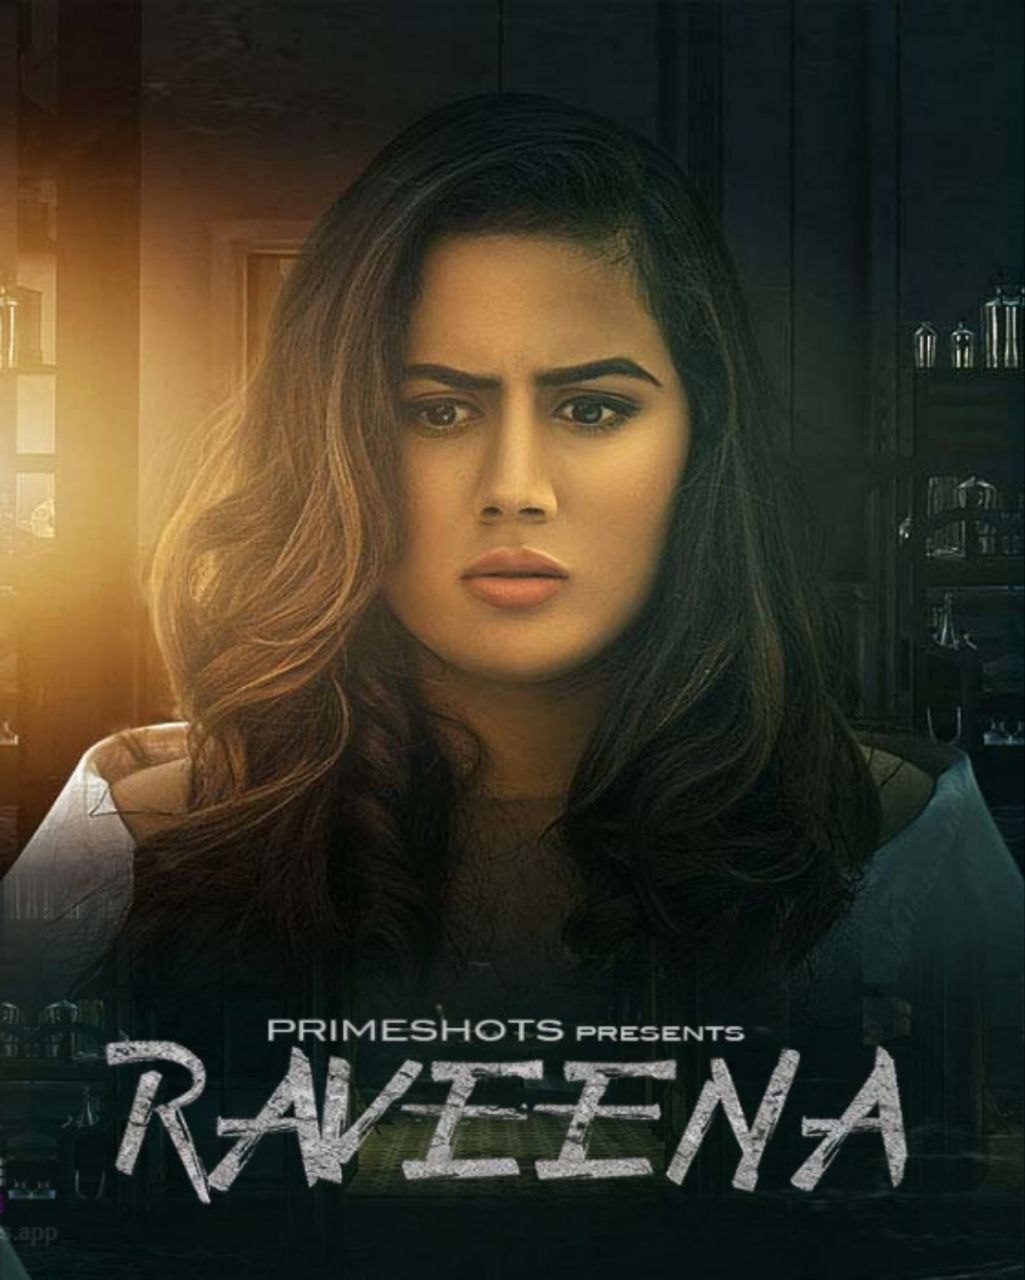 raveena episode 1 or 2 primeshots download